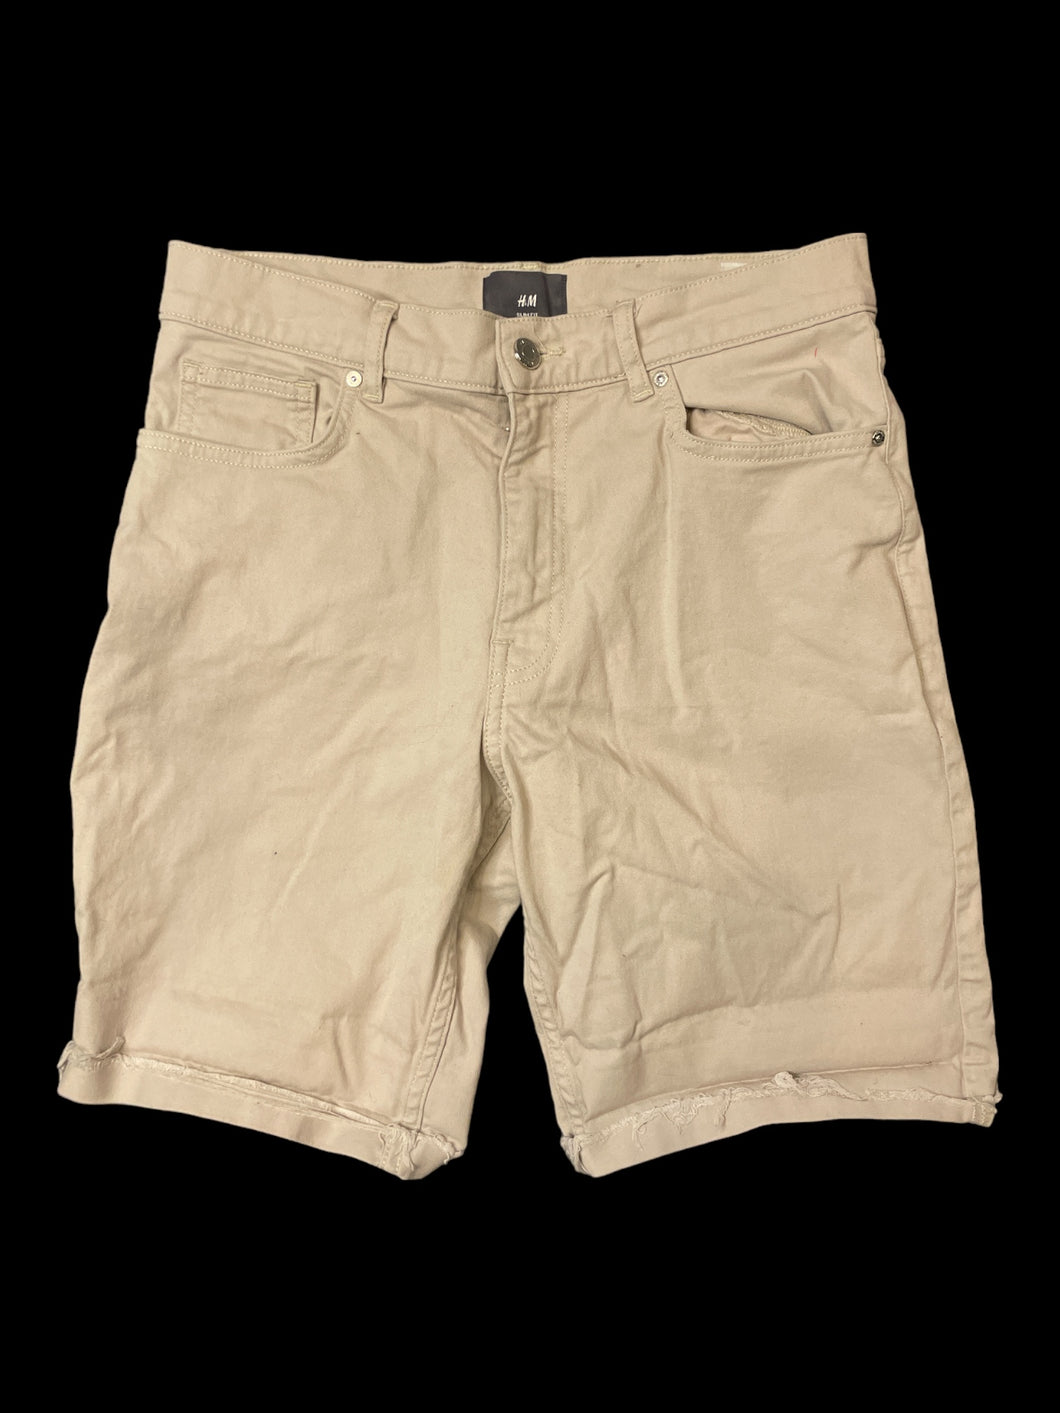 S Off-white denim shorts w/ distressed hems, belt loops, pockets, & zipper/button closure